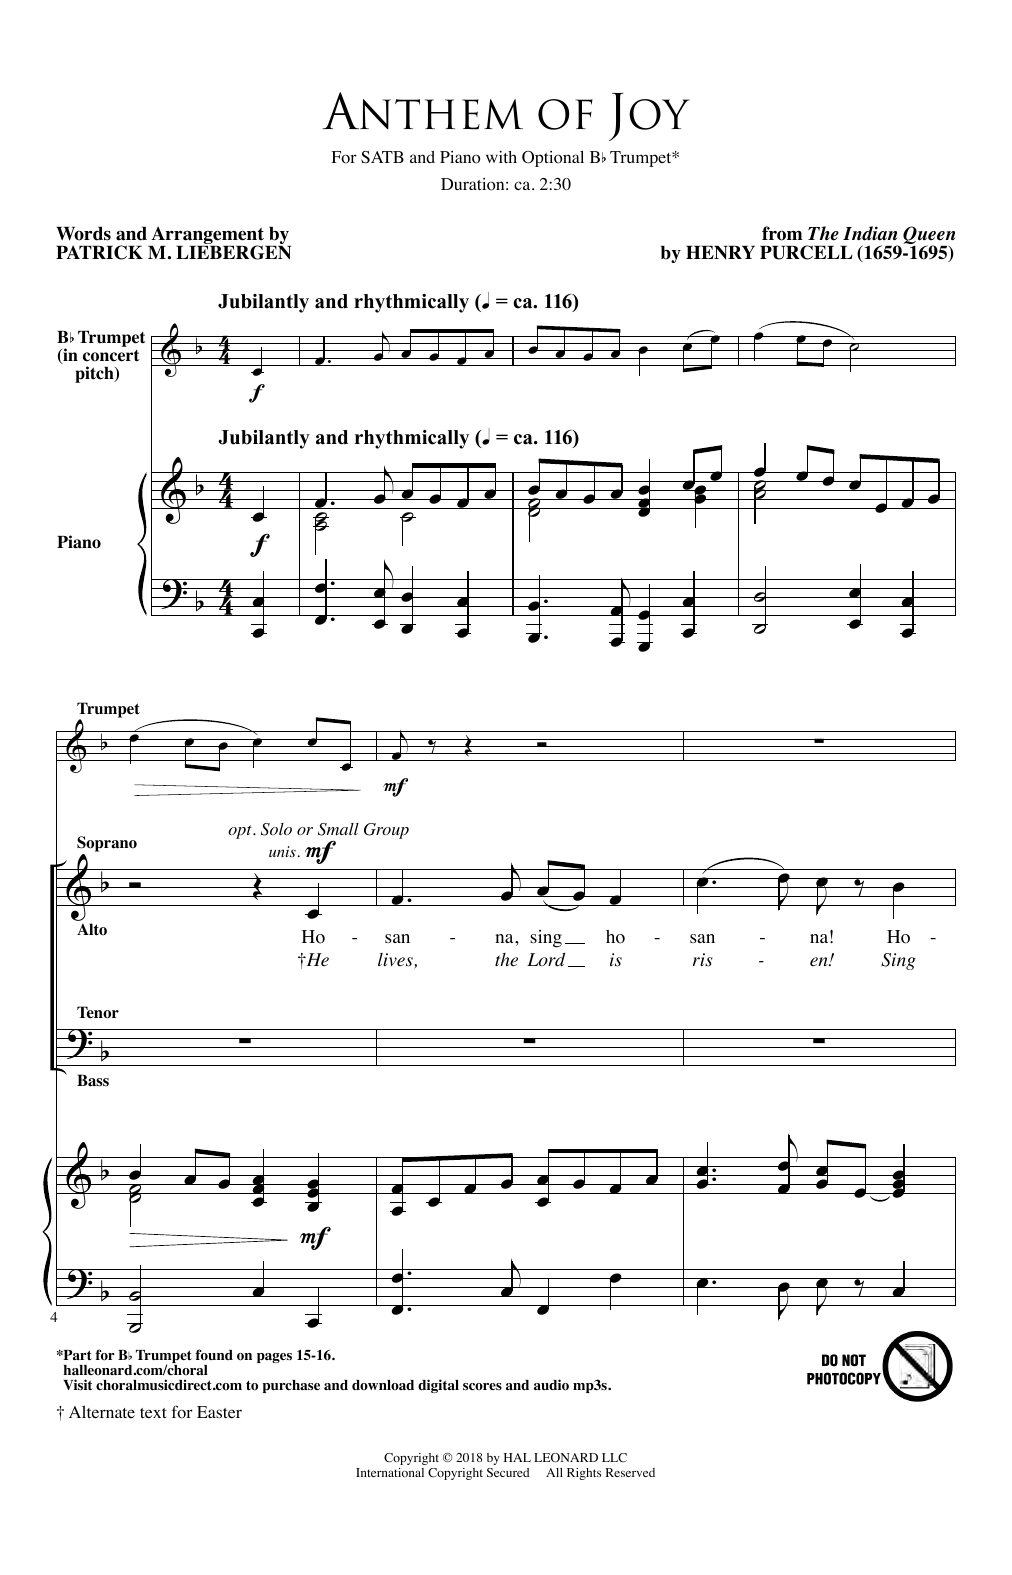 Download Patrick Liebergen Anthem Of Joy Sheet Music